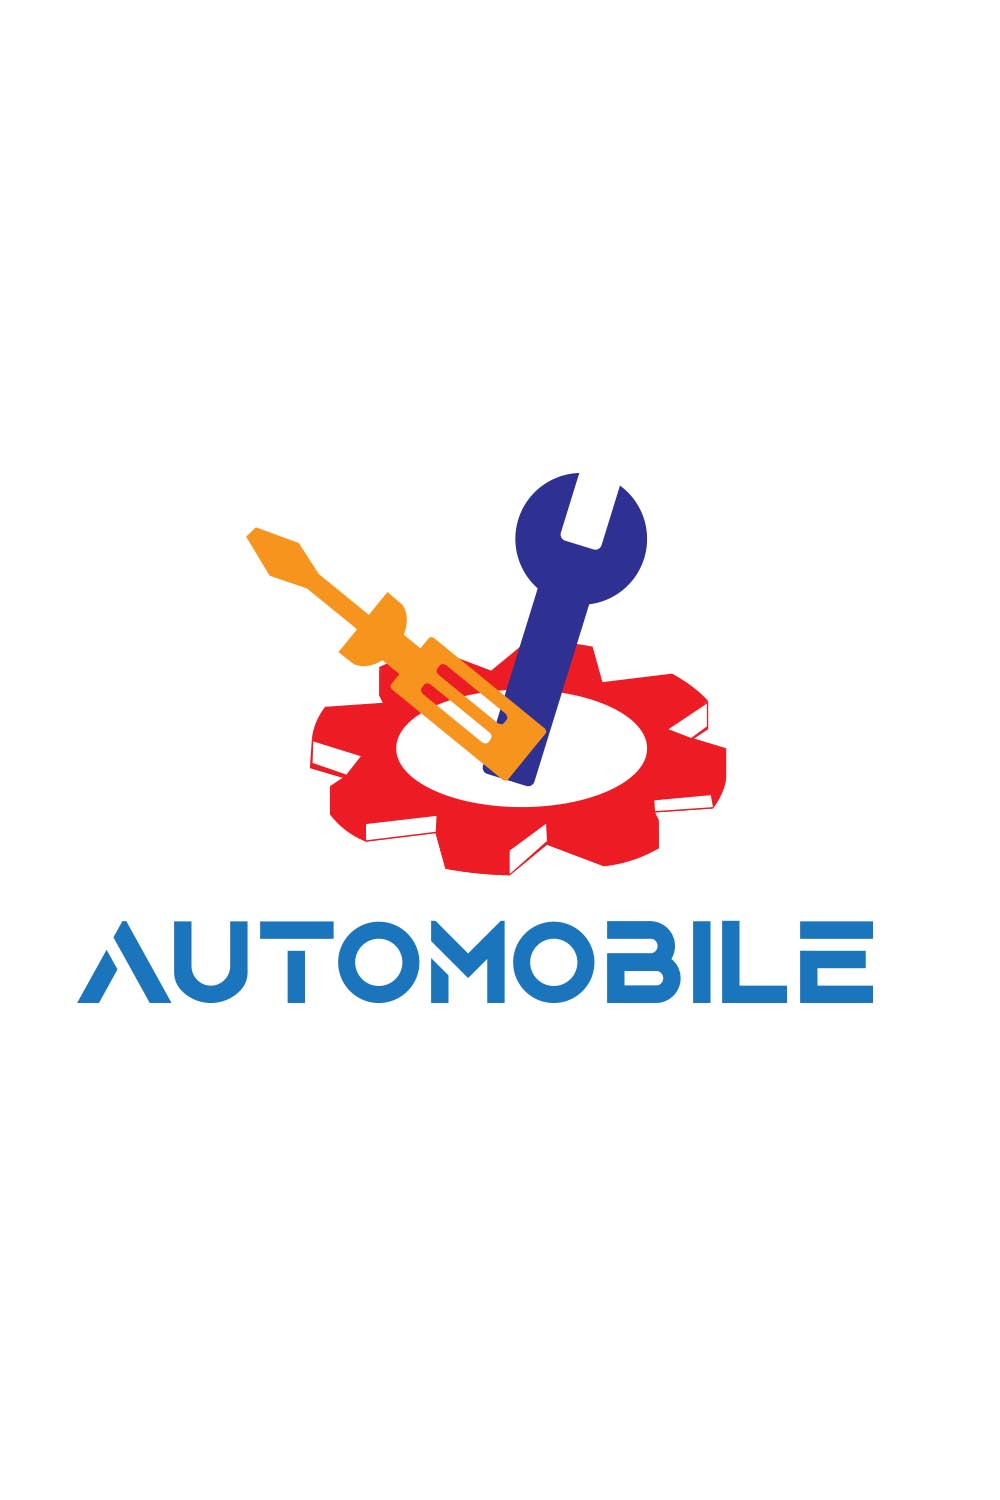 Automobile Logo pinterest preview image.